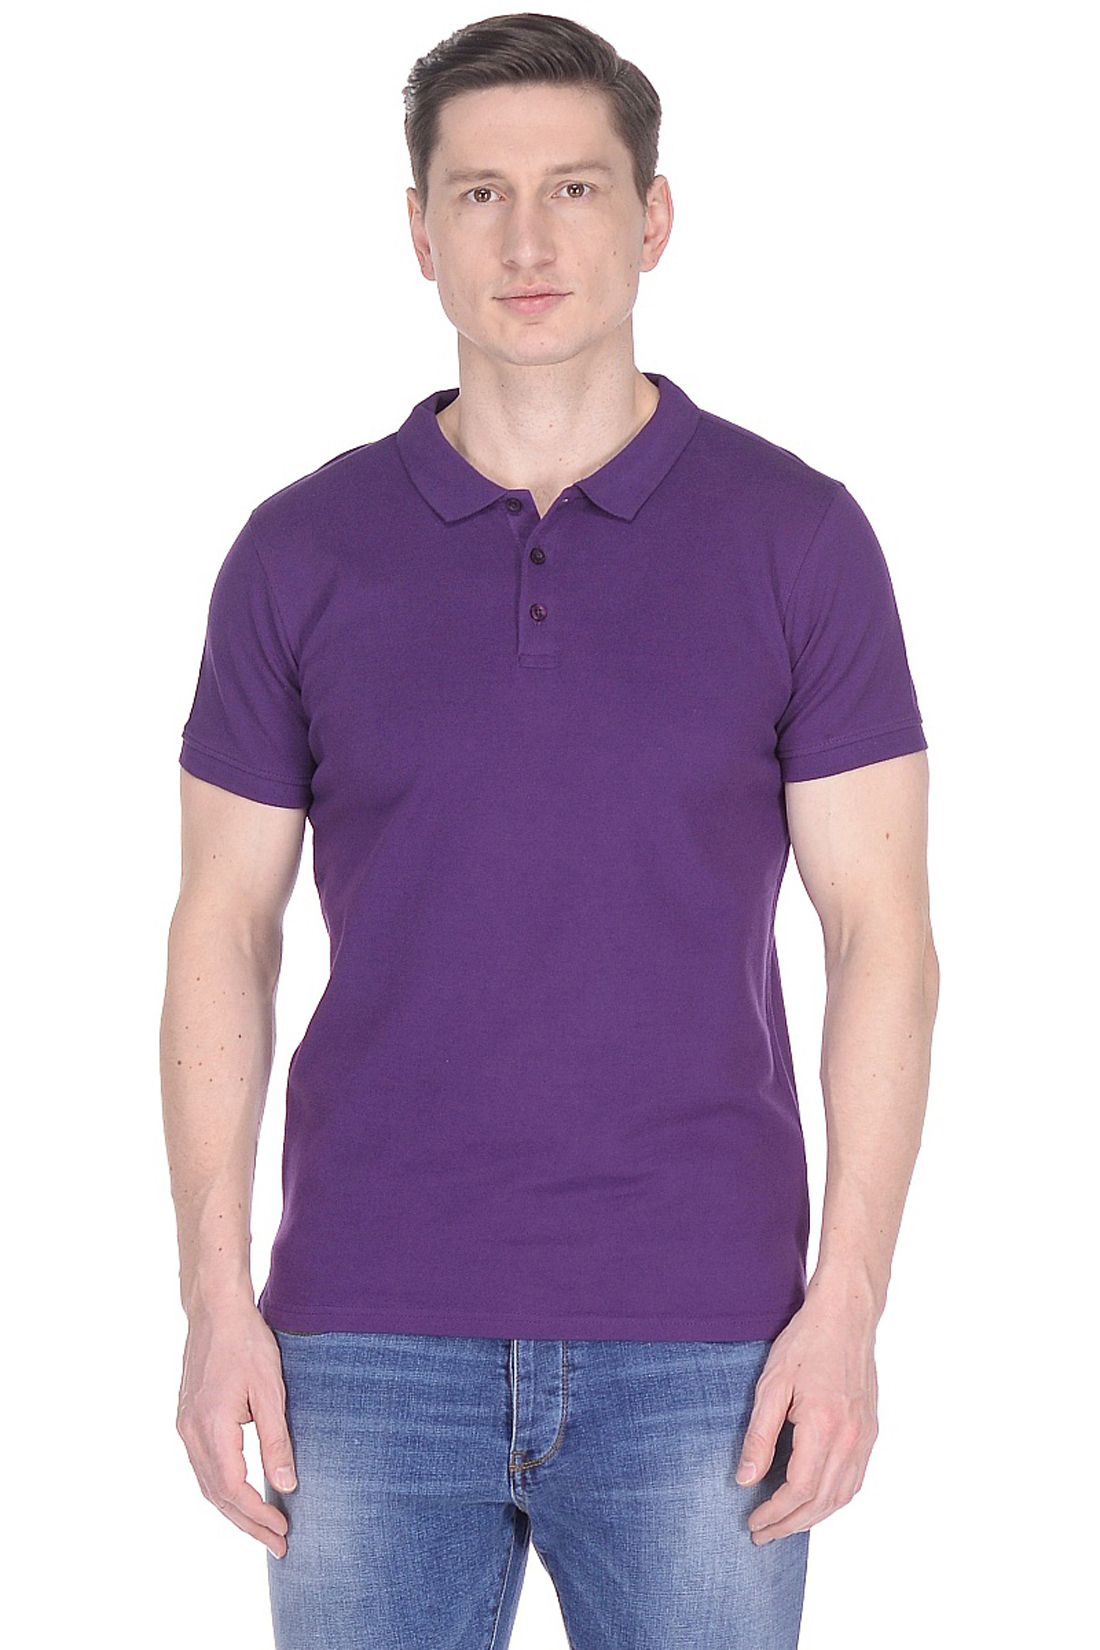 Базовое поло (арт. baon B708203), размер 3XL, цвет фиолетовый Базовое поло (арт. baon B708203) - фото 1